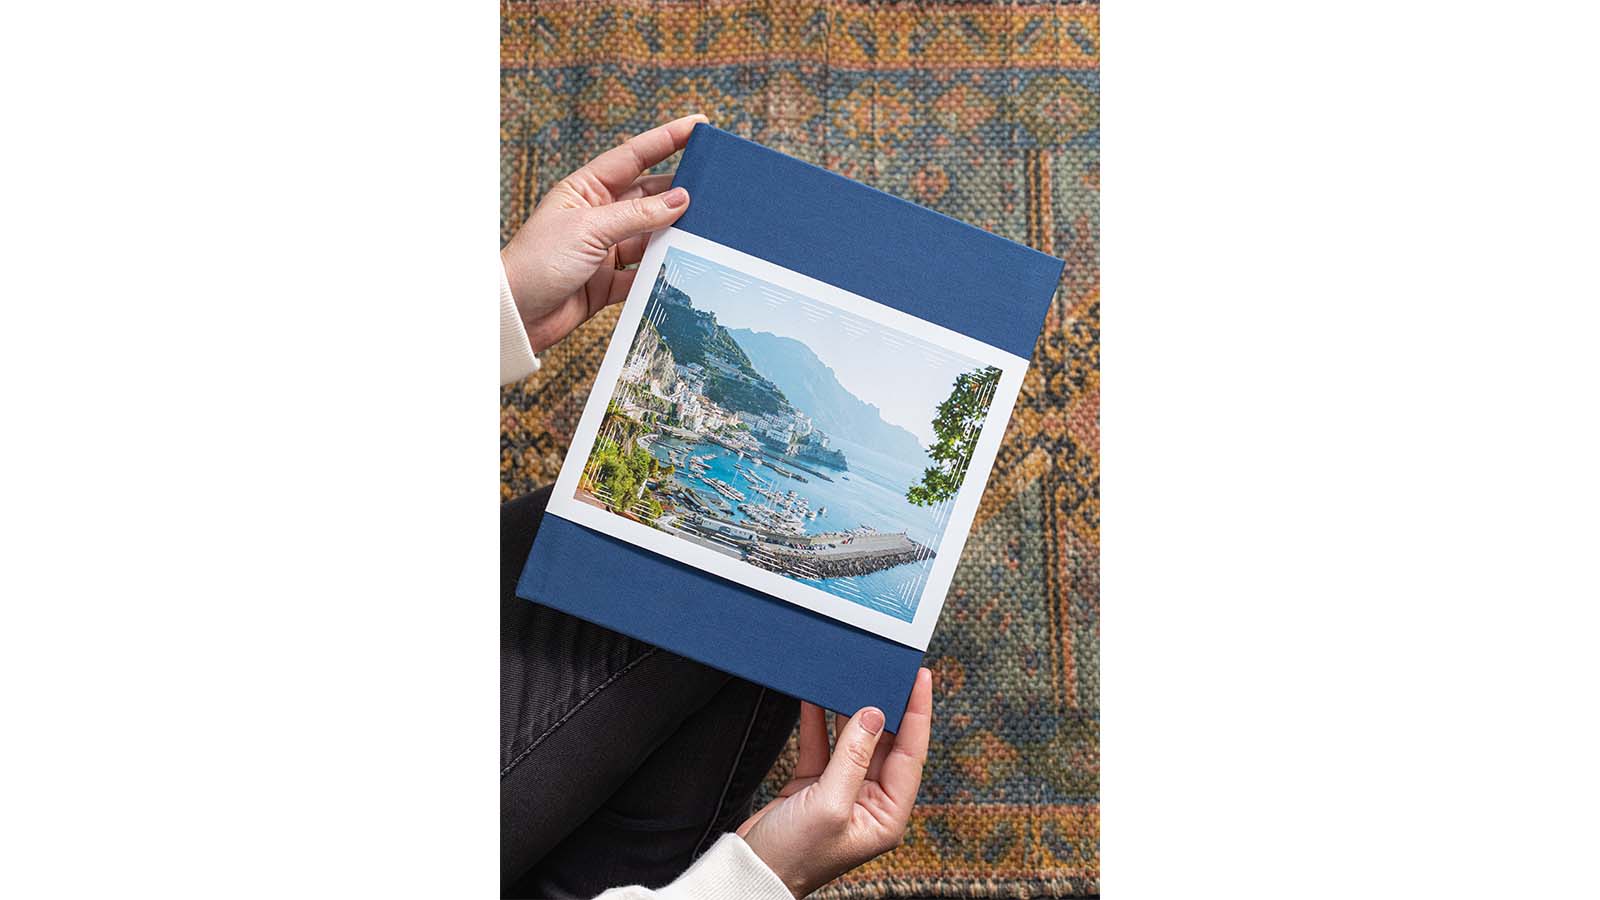 Hardcover Photo Books - Premium Layflat Hardback - Printique, An